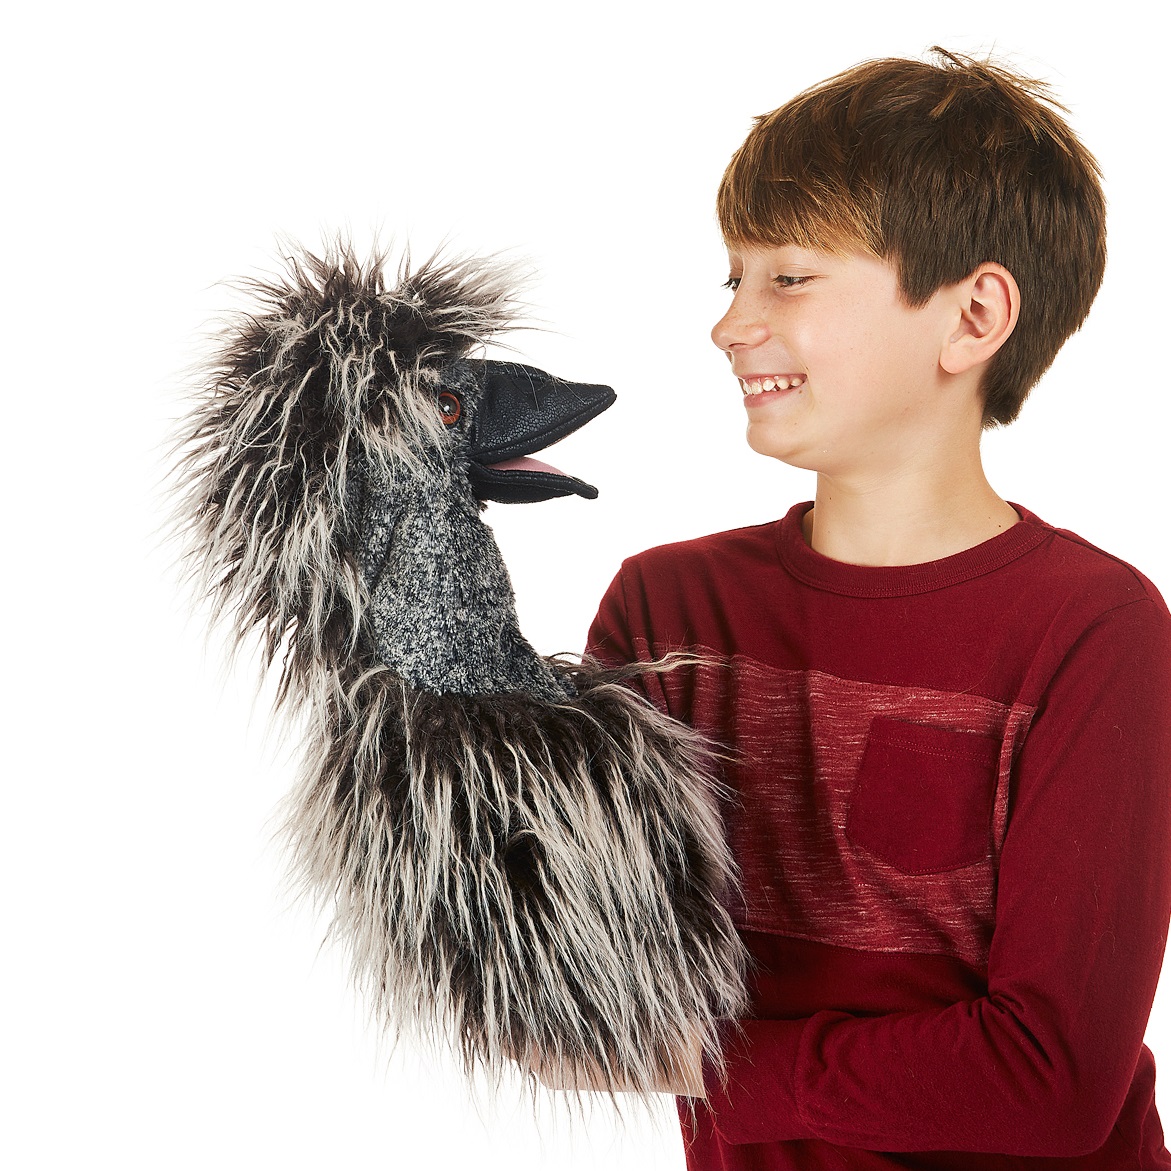 Emu Stage Puppet    